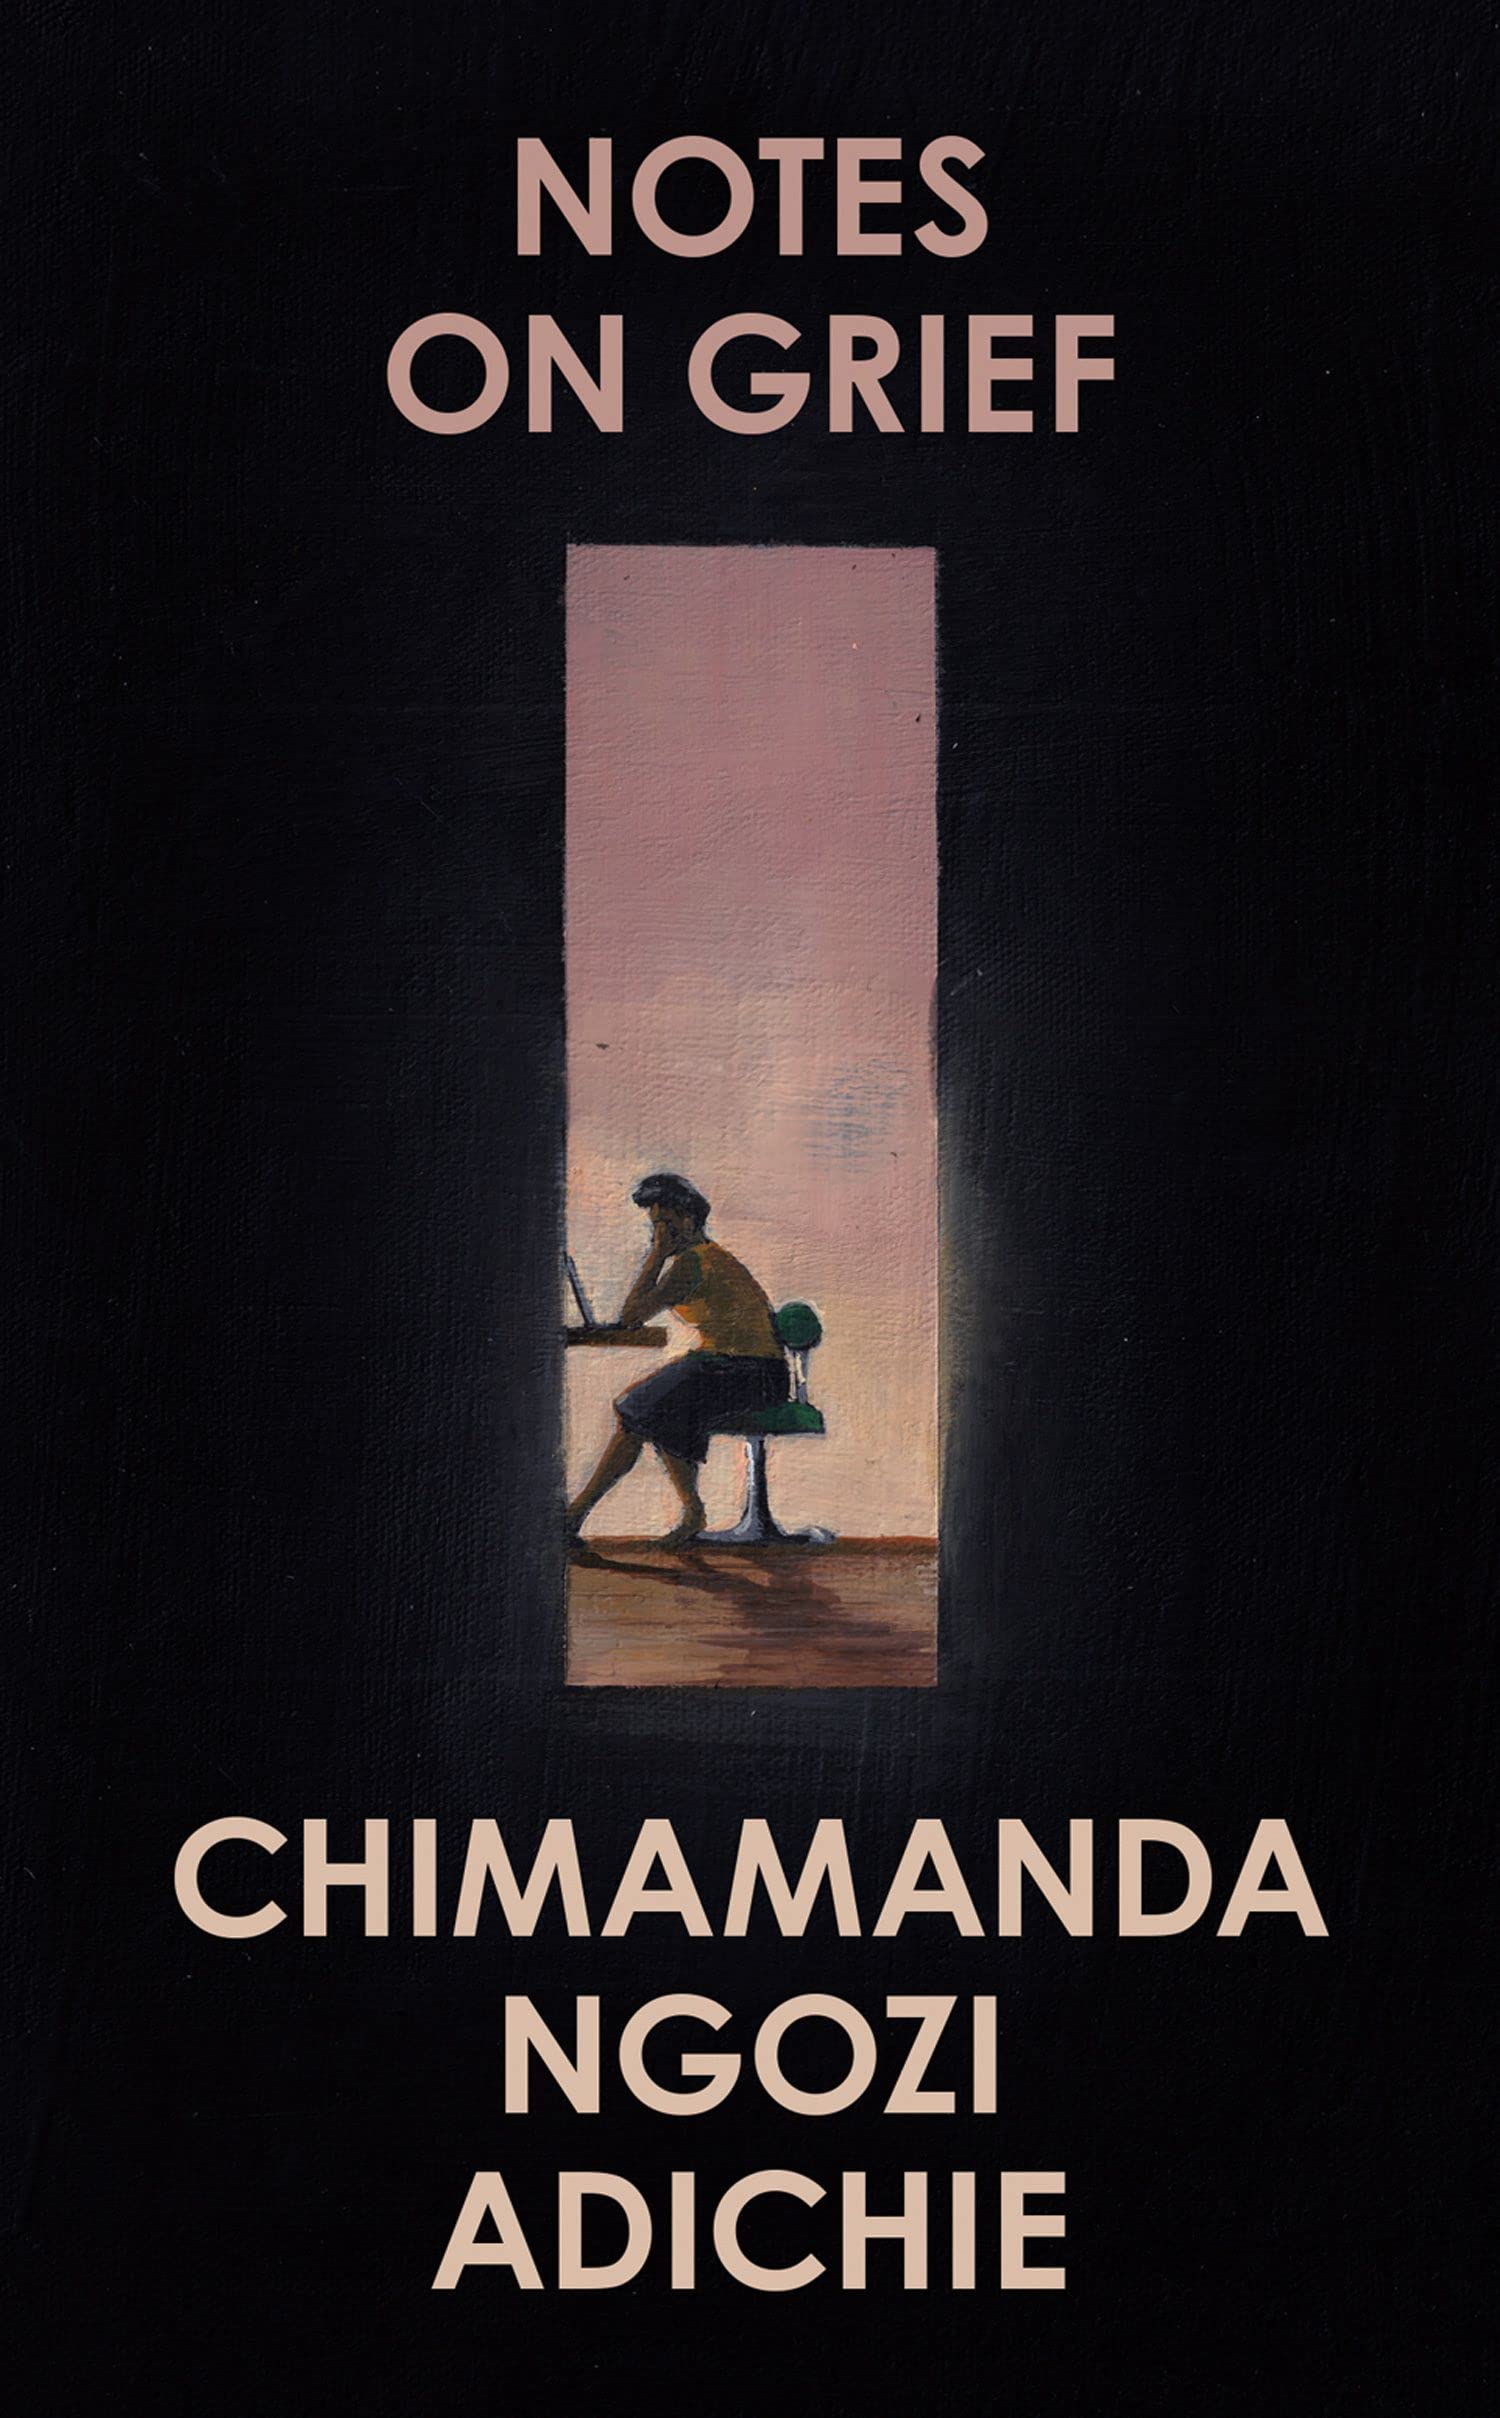 Notes on Grief by Chimamanda Ngozi Adichie Hardcover